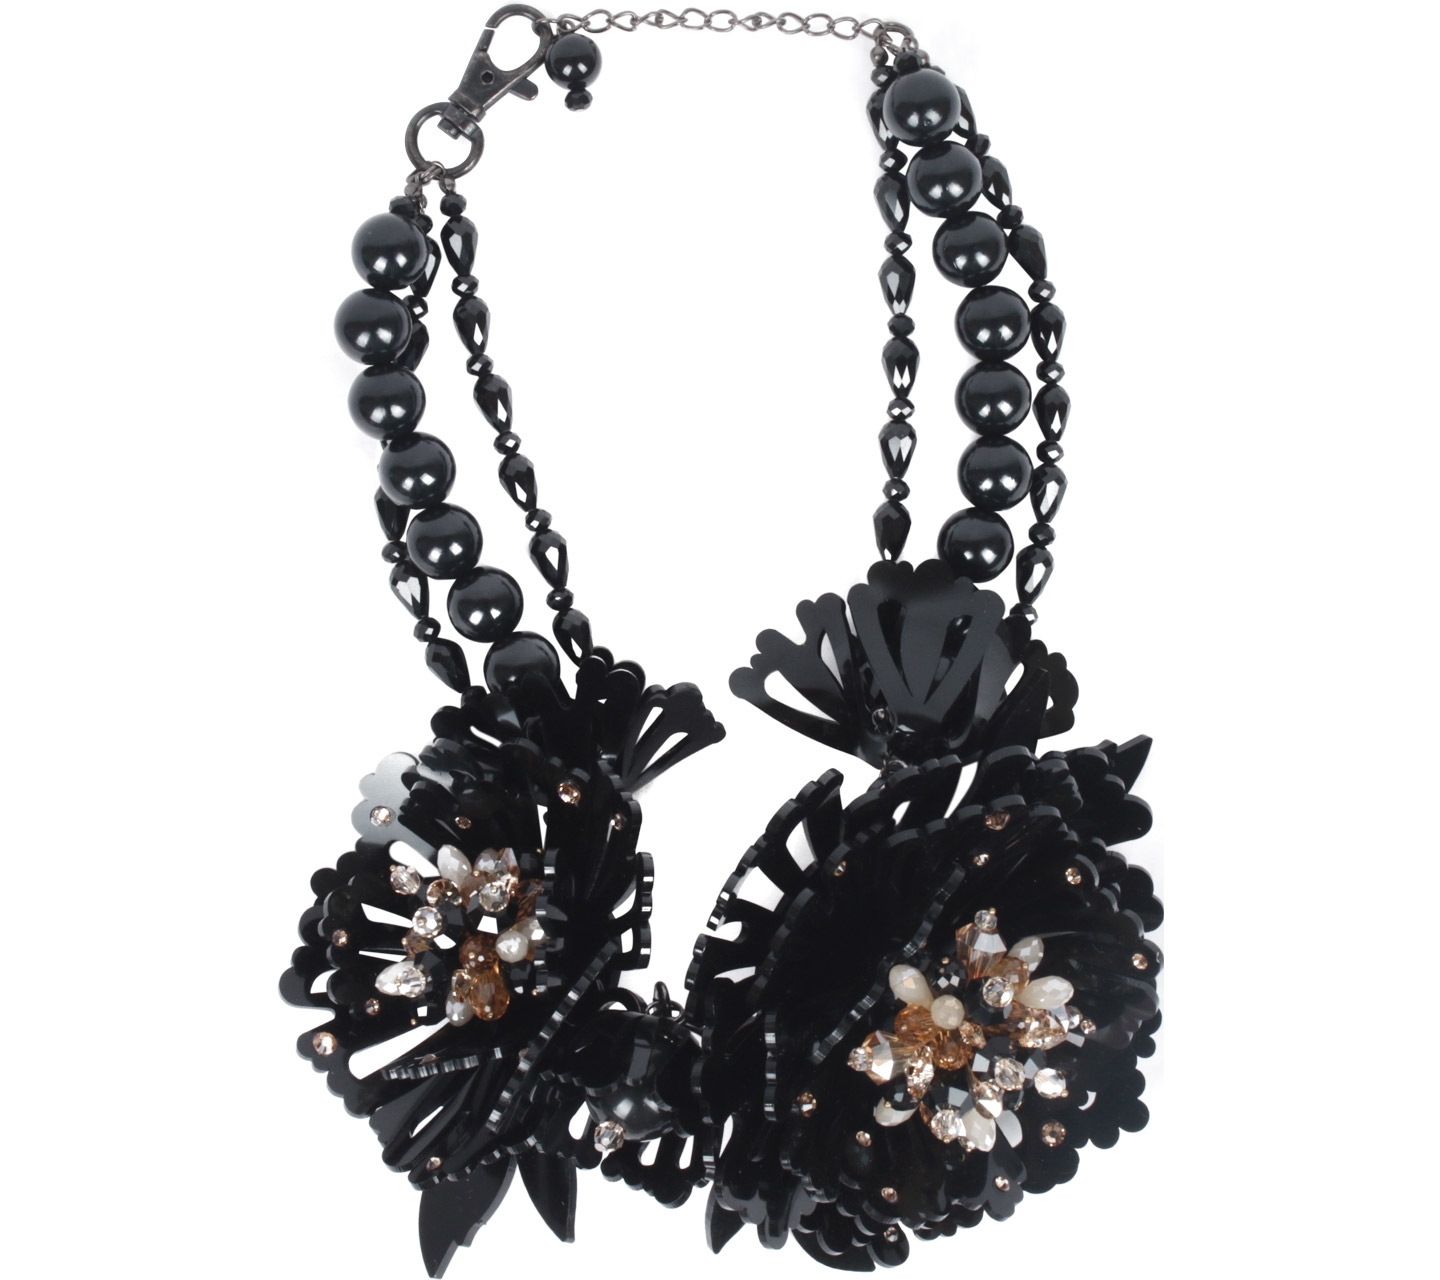 More & More Black Jewellery